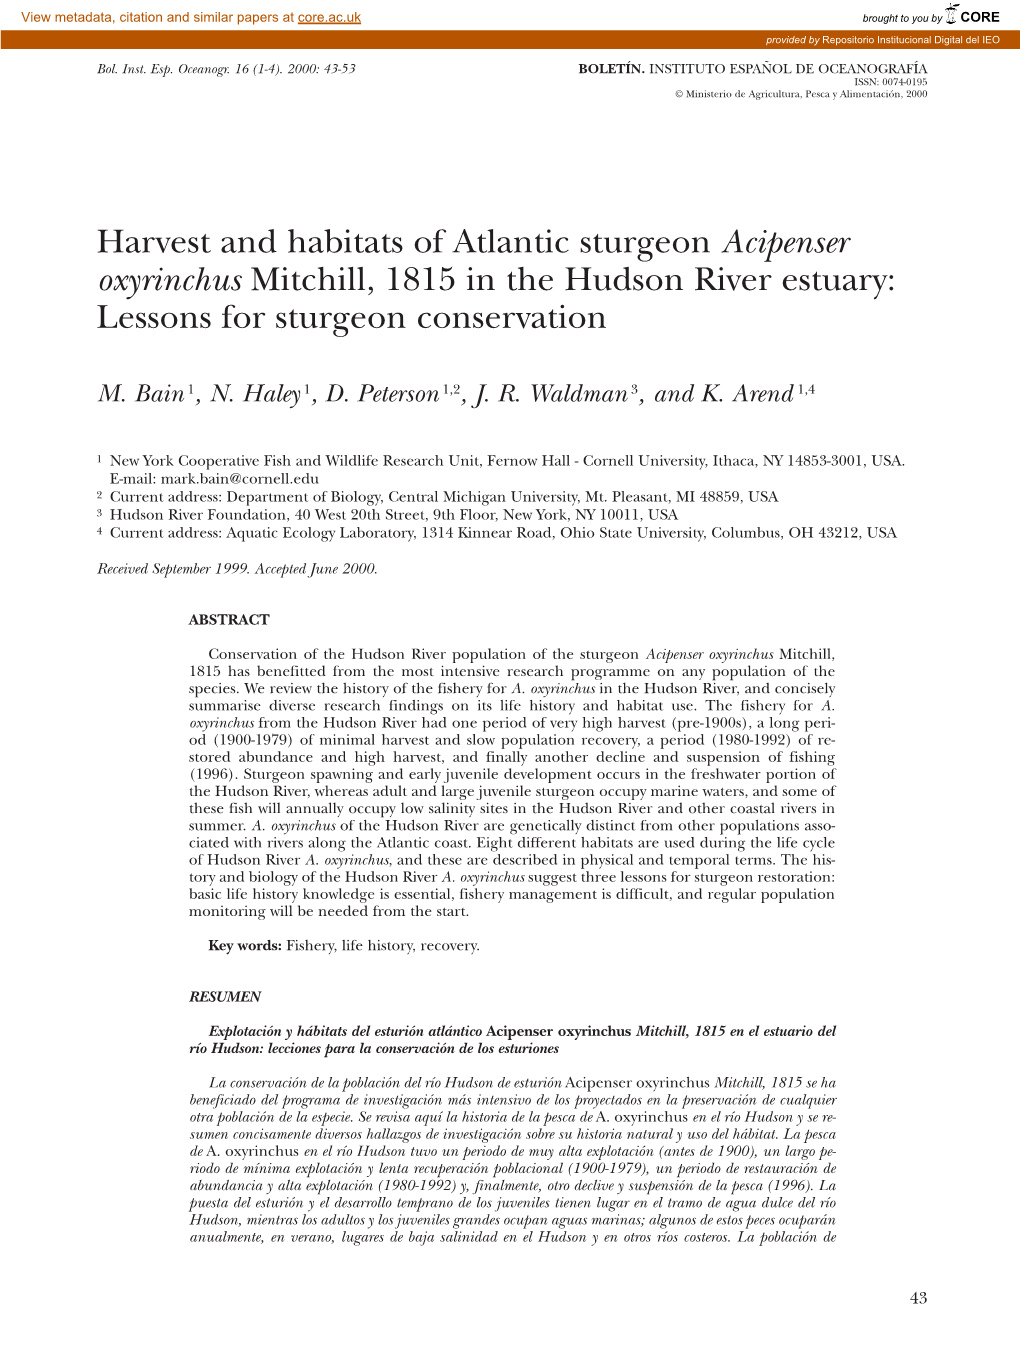 Harvest and Habitats of Atlantic Sturgeon Acipenser Oxyrinchus Mitchill, 1815 in the Hudson River Estuary: Lessons for Sturgeon Conservation